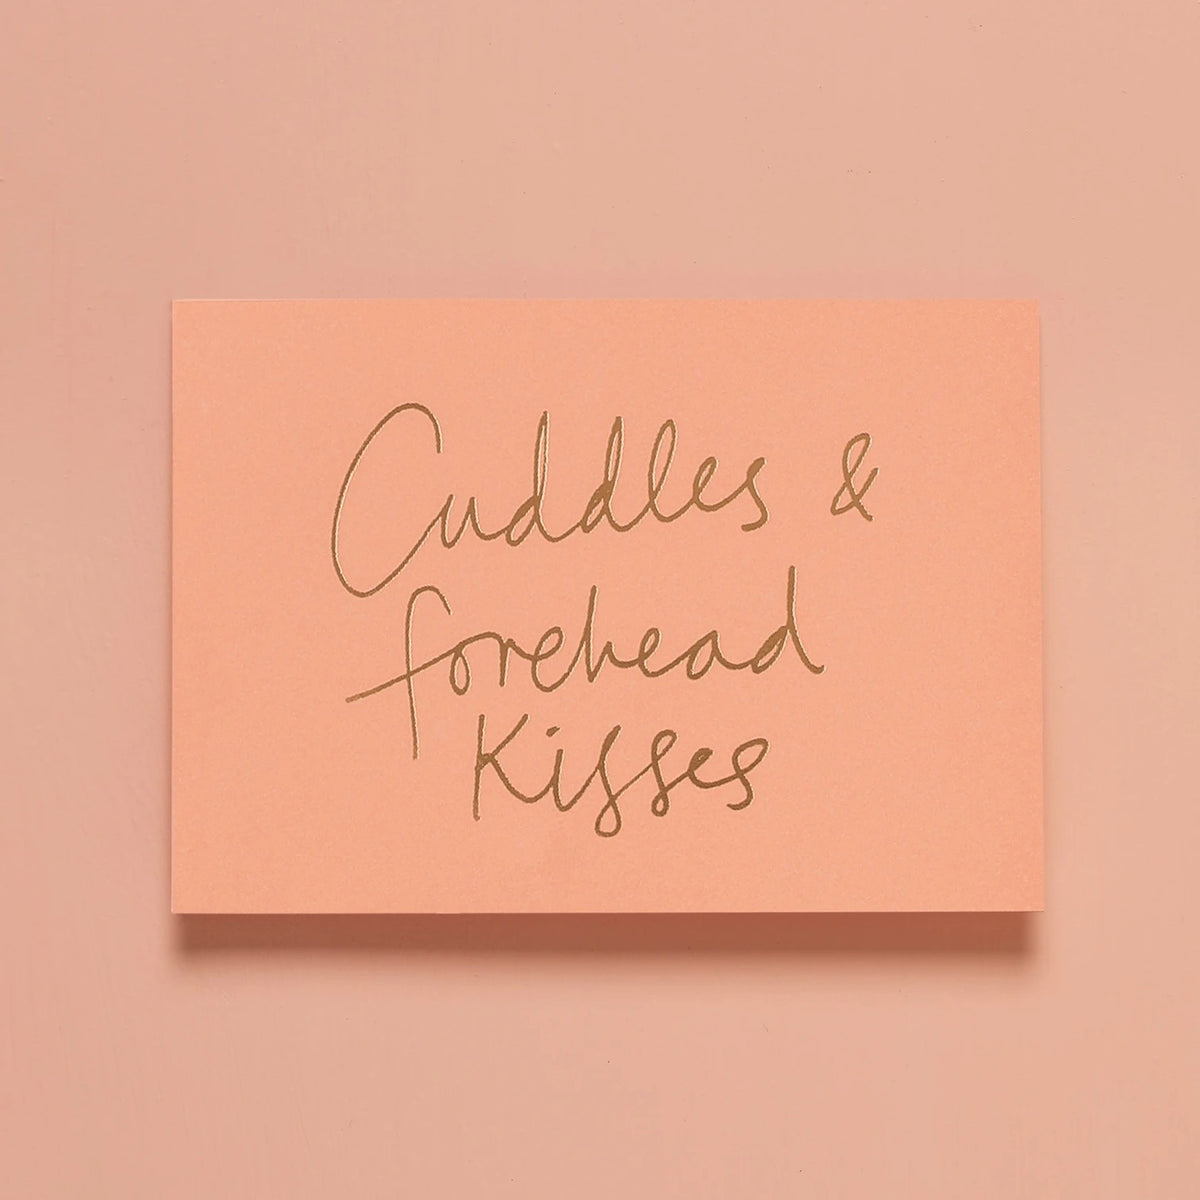 Cuddles+forehead kisses greeting card